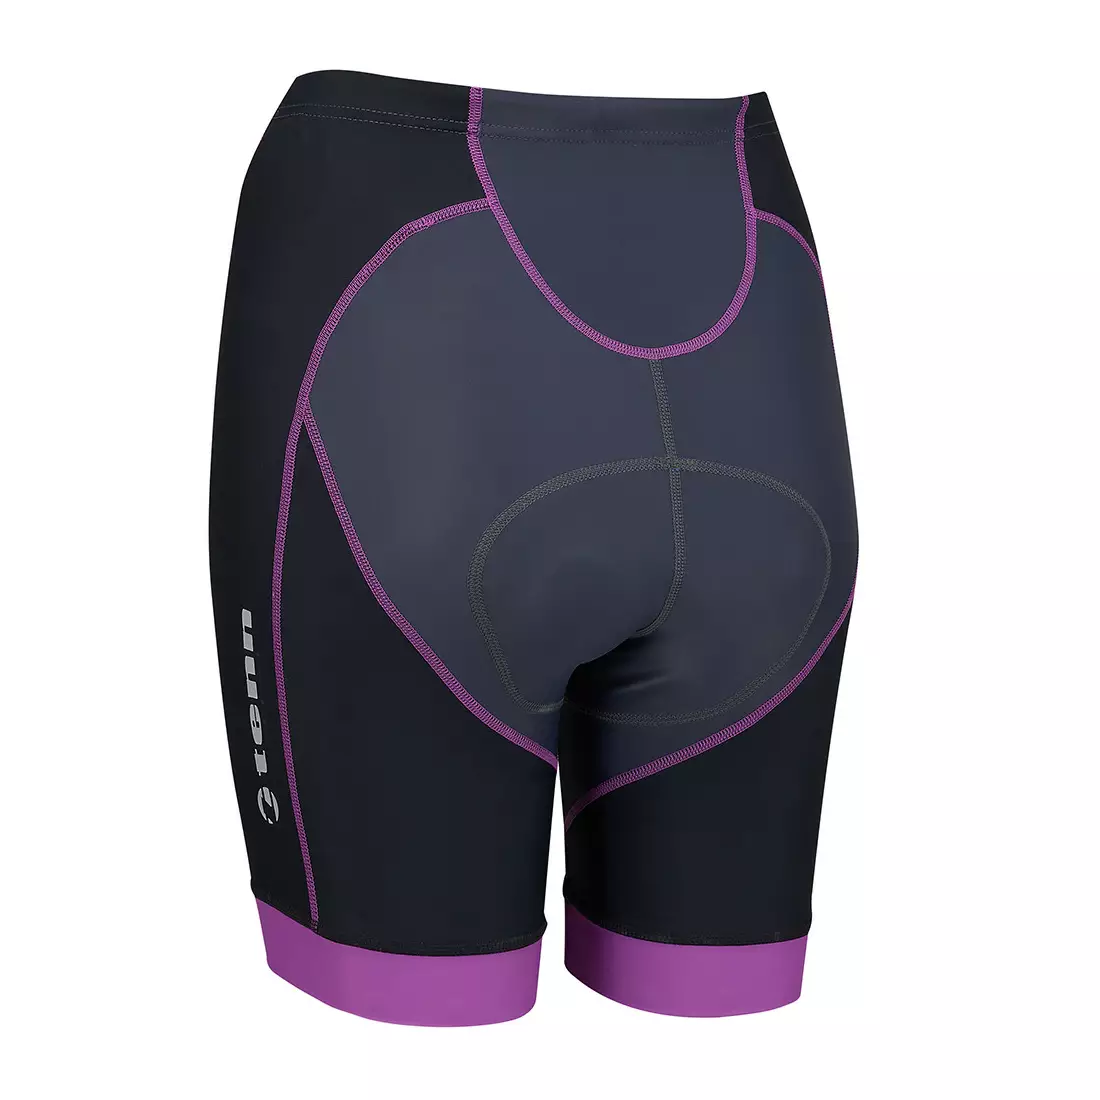 TENN OUTDOORS Women's bibless cycling shorts VIPER+ 2.0 black and purple